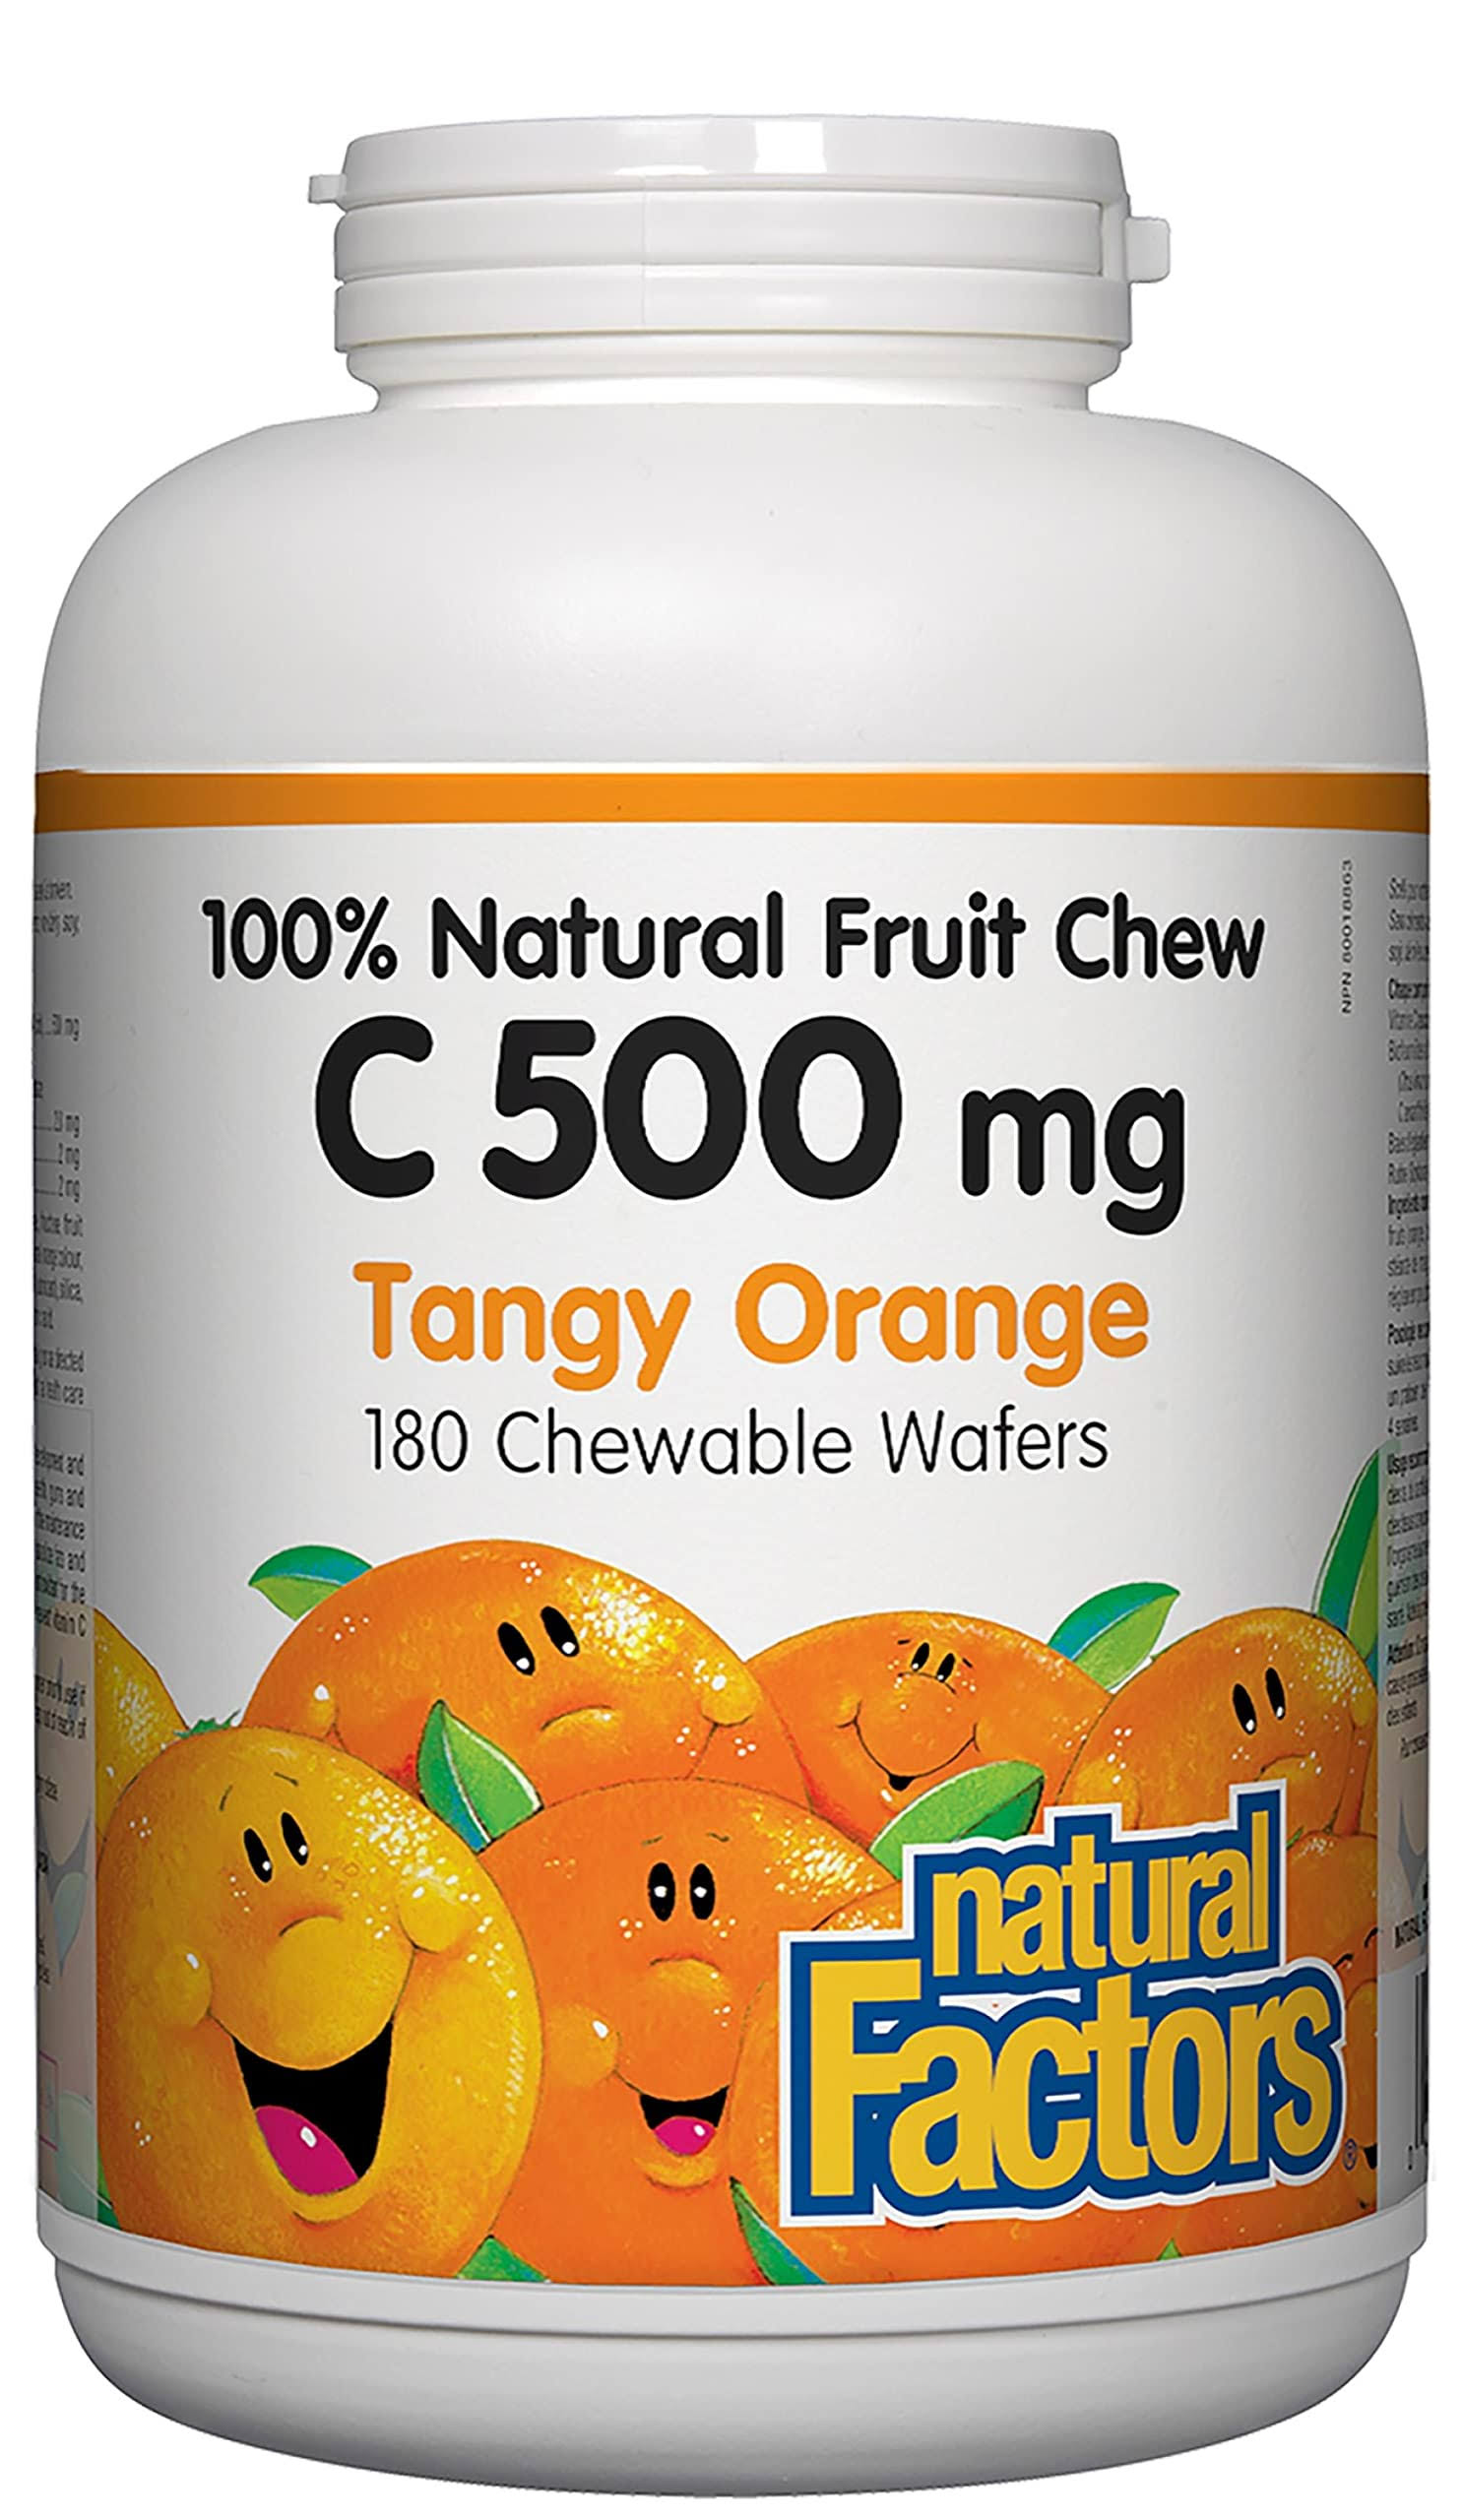 Natural Factors Vitamin C - Tangy Orange Flavor, 500mg, 180 chewables